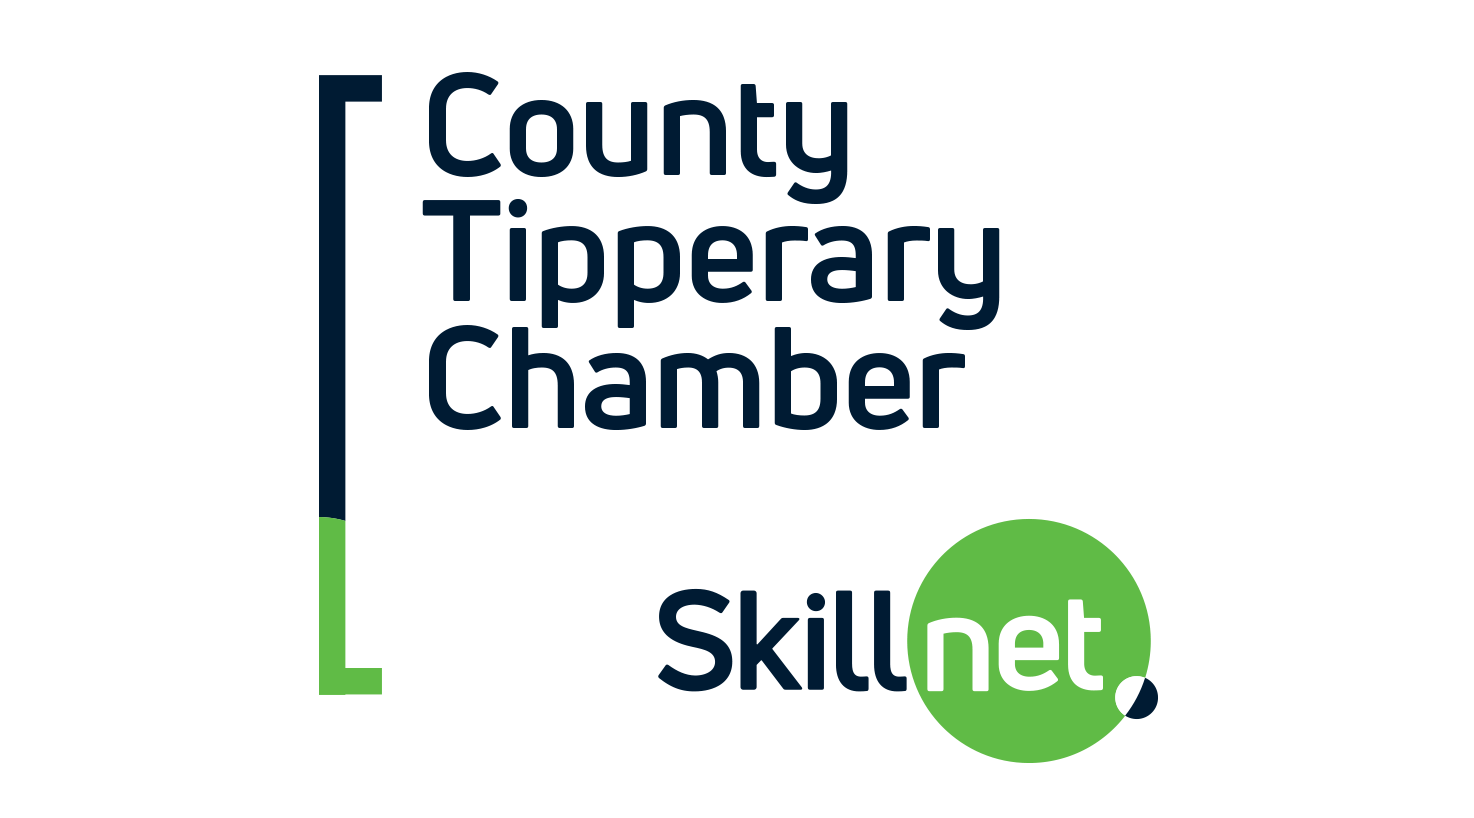 County Tipperary Chamber Skillnet